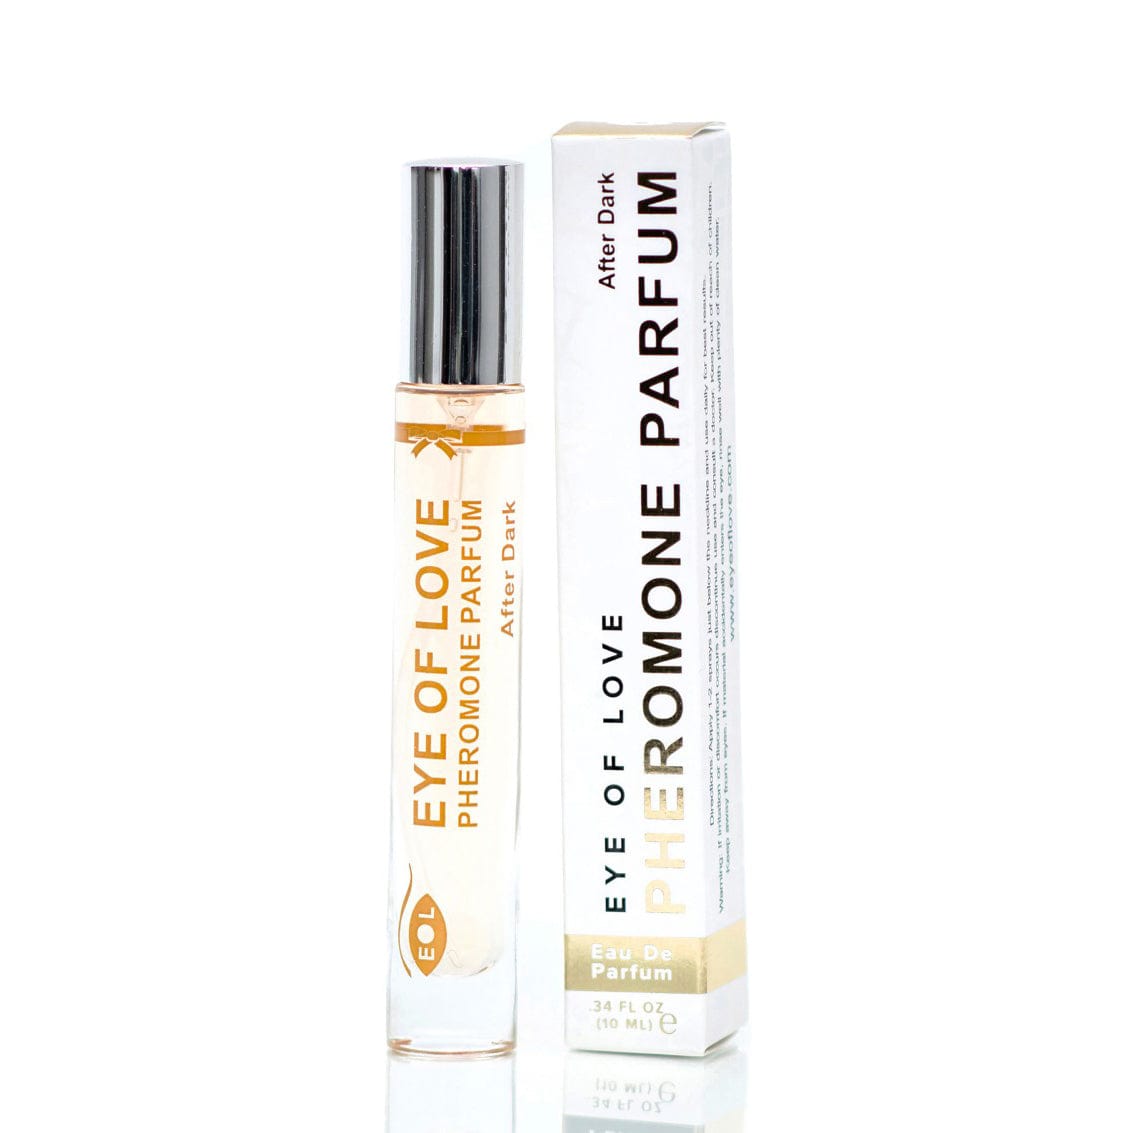 Eye of Love - After Dark Pheromone Perfume Spray For Her Travel Size 10ml -  Pheromones  Durio.sg